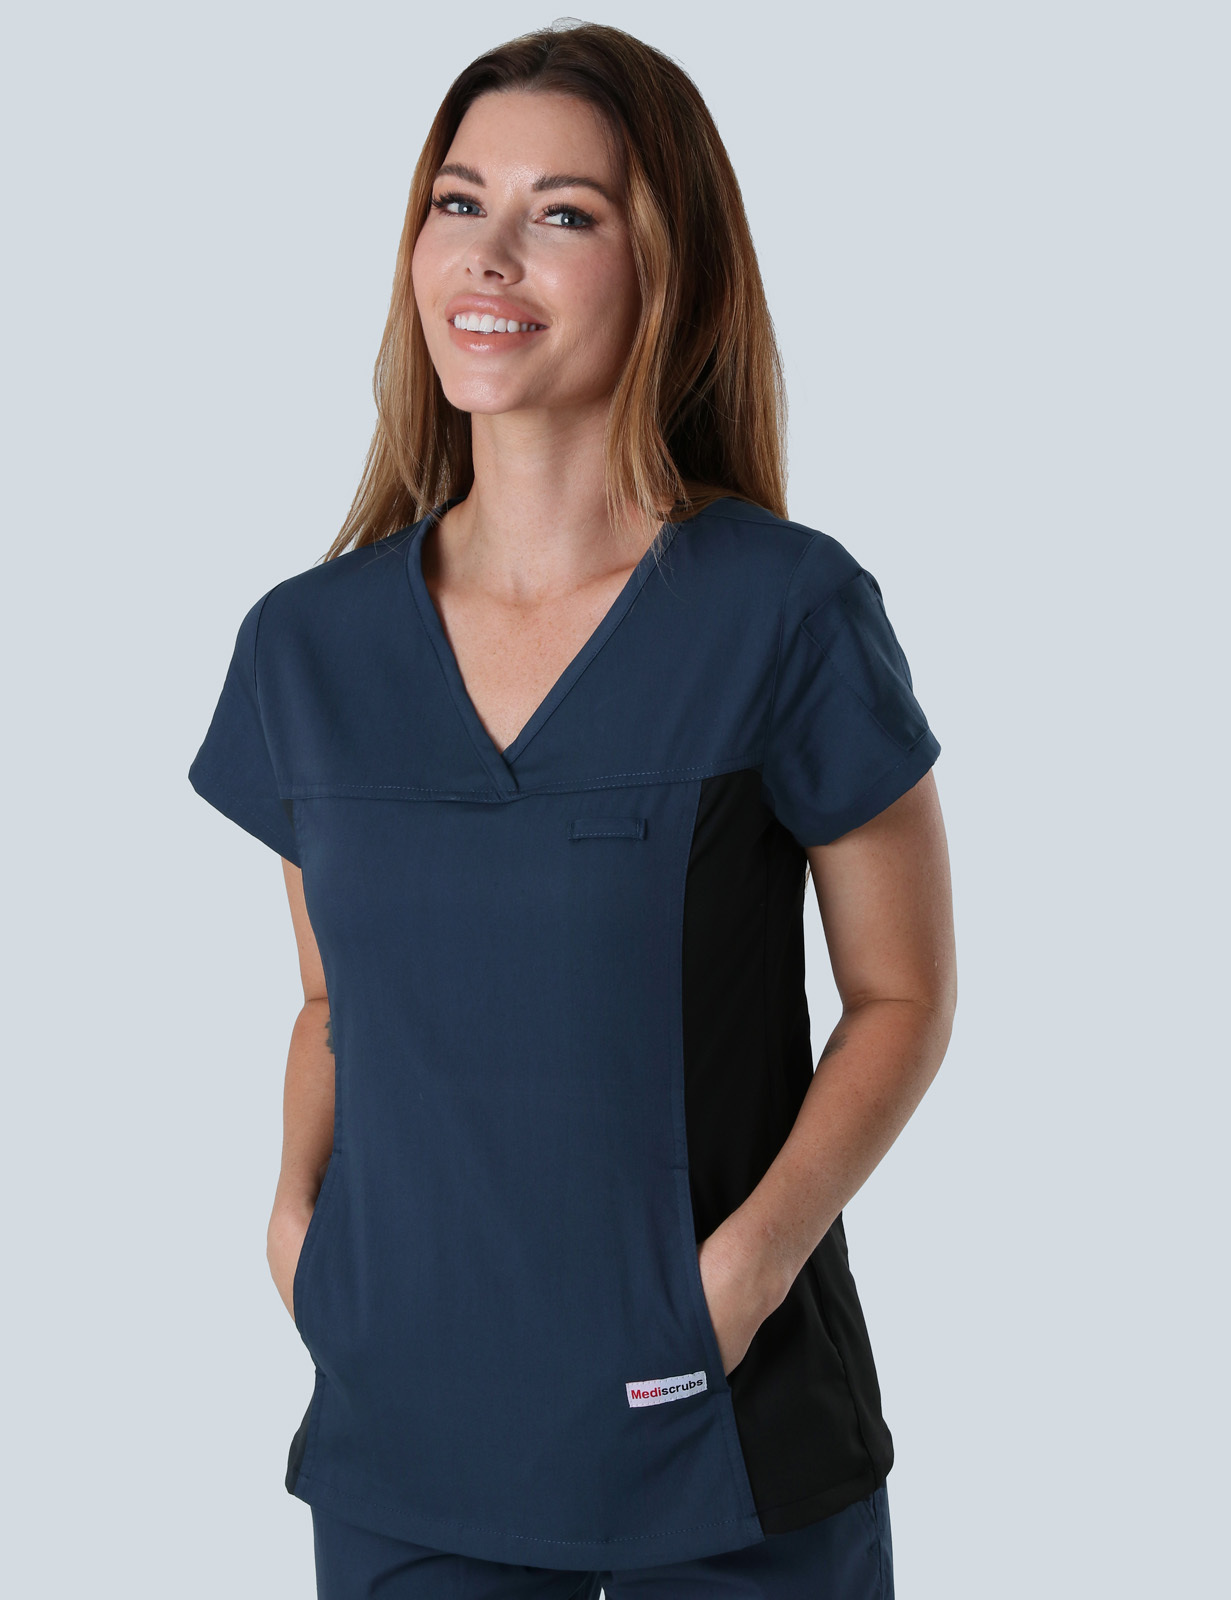 UQ Vets Gatton Senior Nurse Uniform Top Only Bundle (Women's Fit Spandex Top in Navy incl Logos)